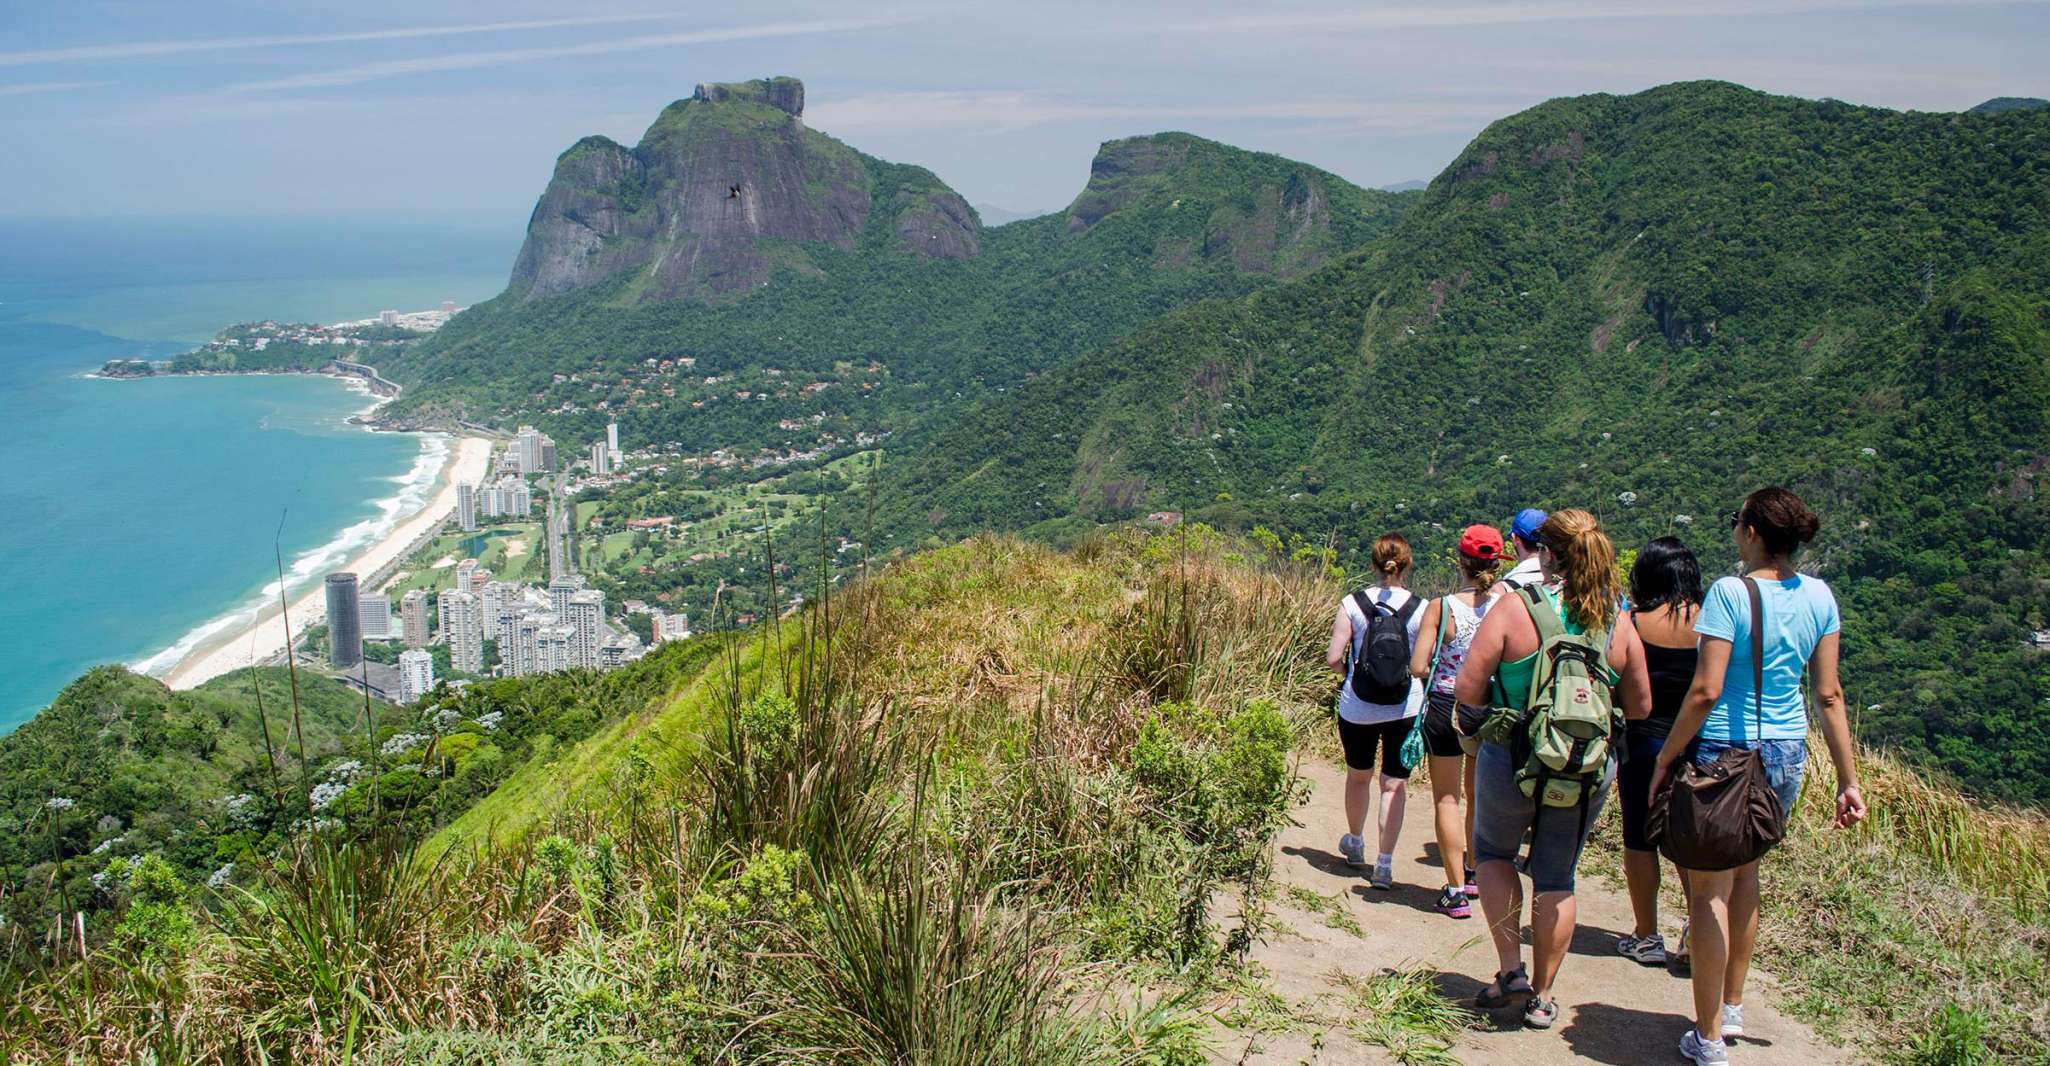 Housity - Rio de Janeiro, Vidigal Favela Tour and Two Brothers Hike